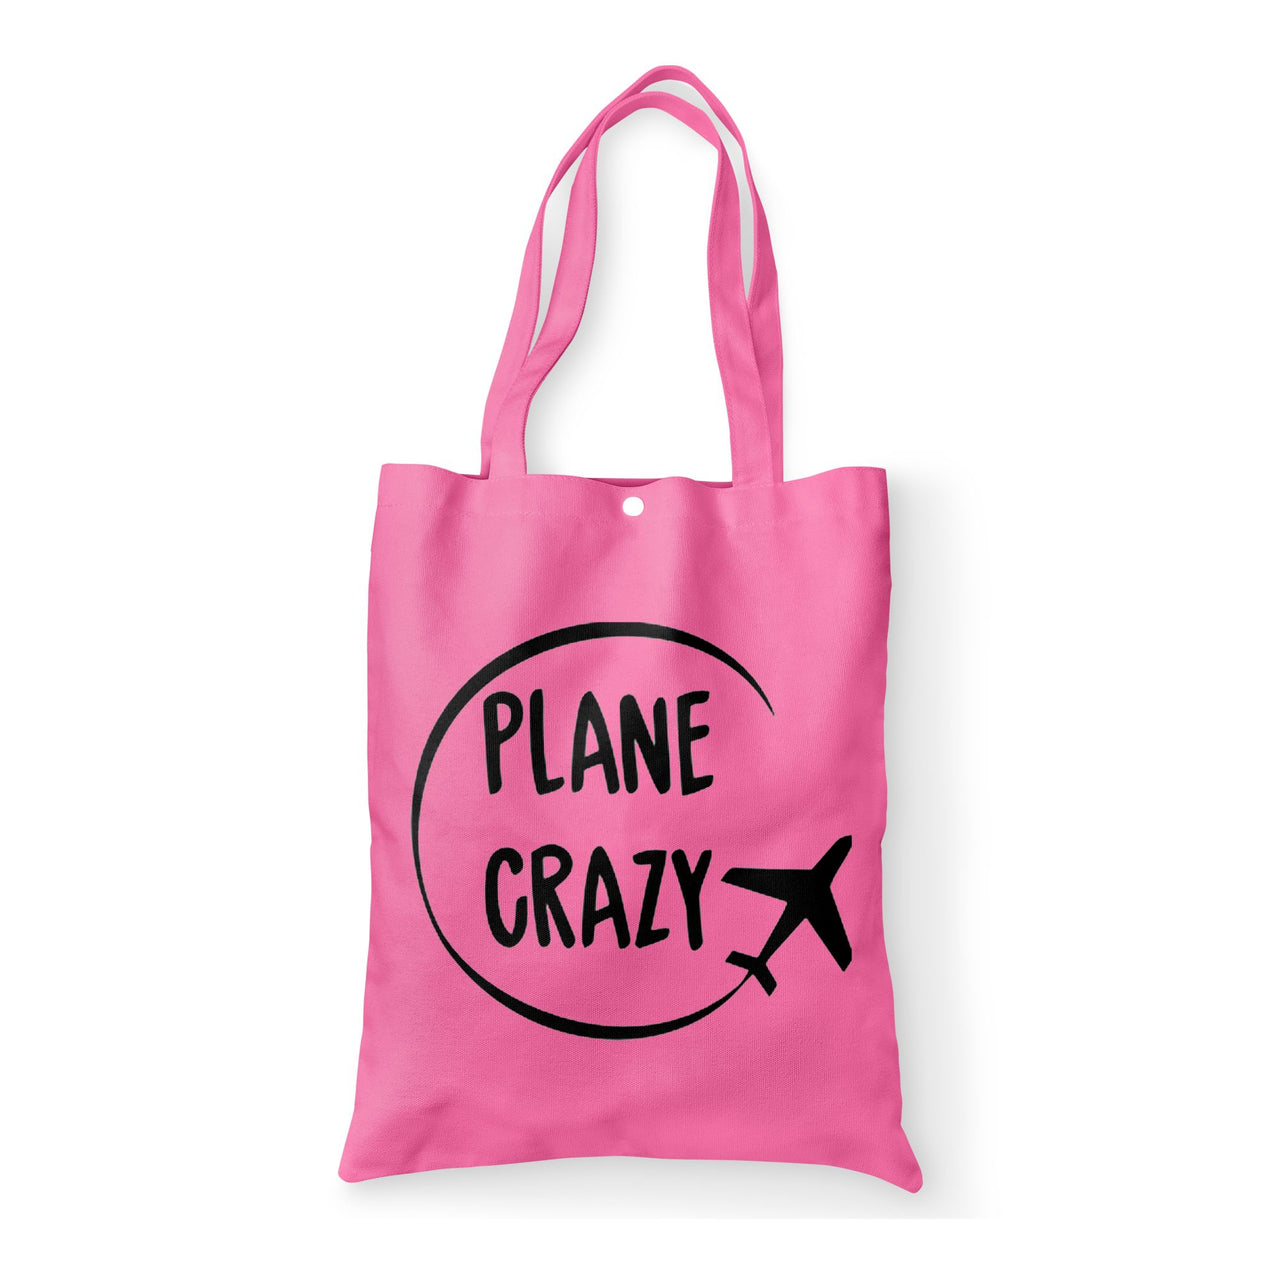 Plane Crazy Designed Tote Bags